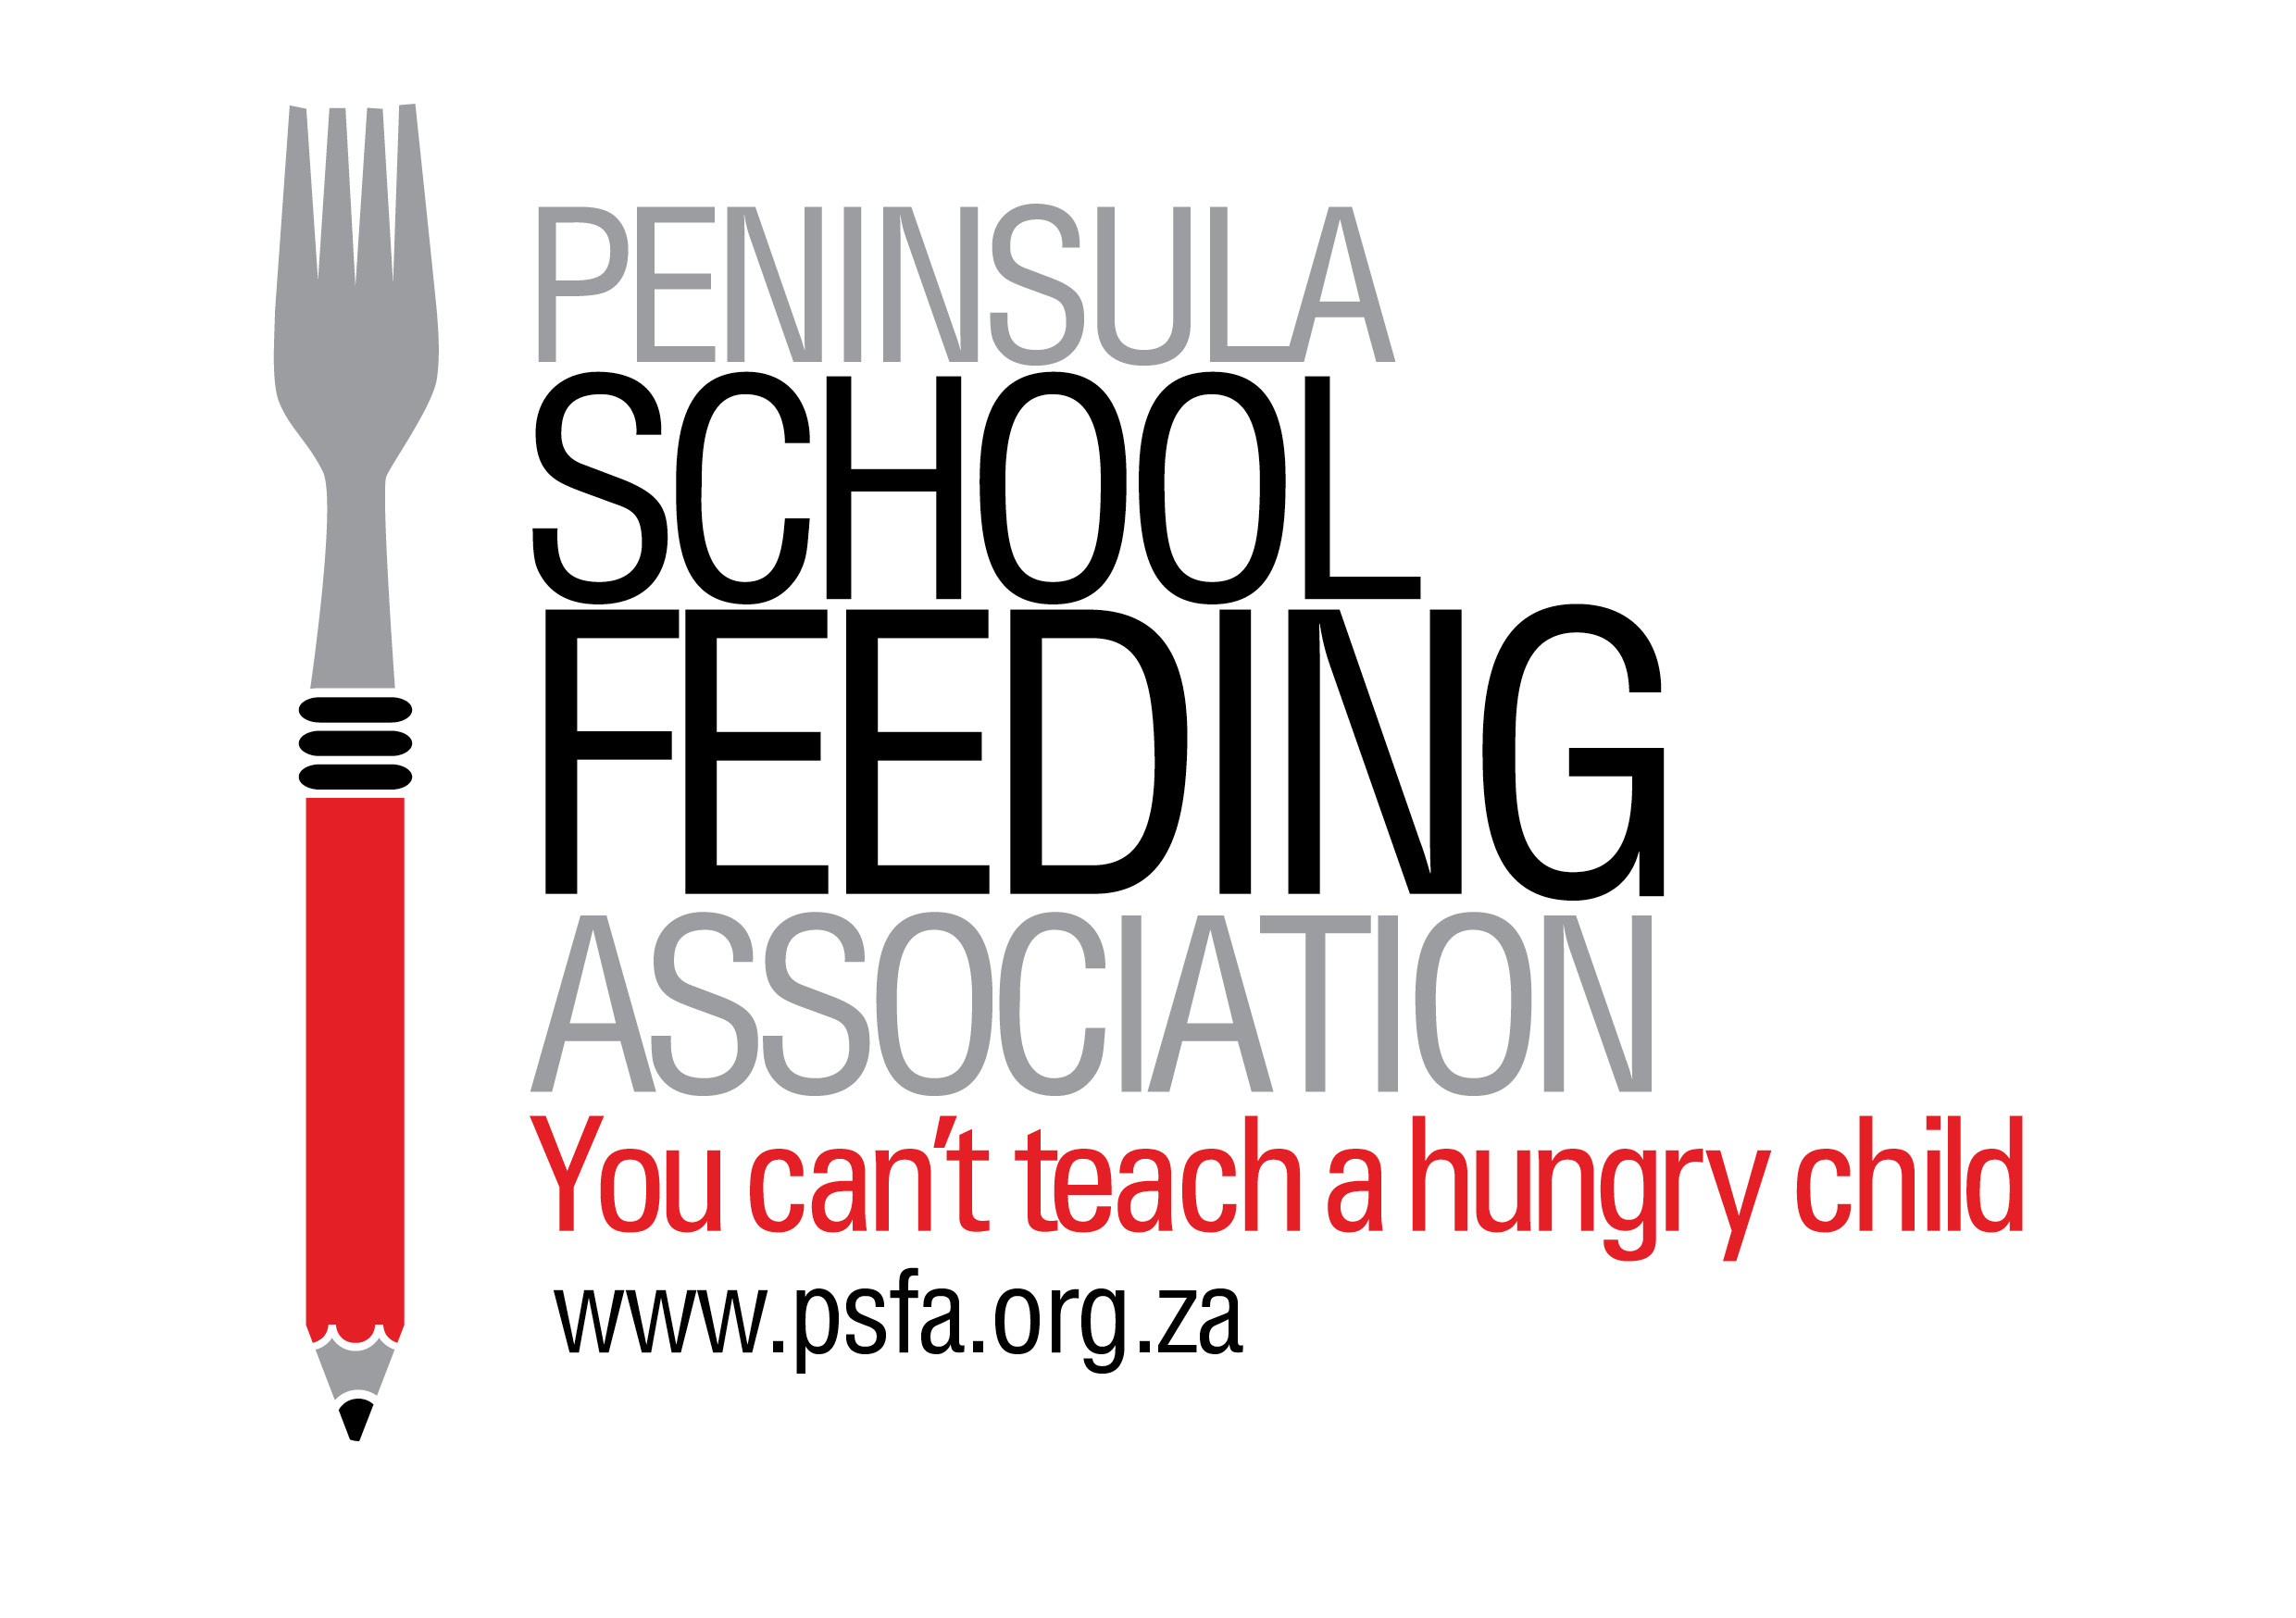 Peninsula Schools Feeding Association.jpg